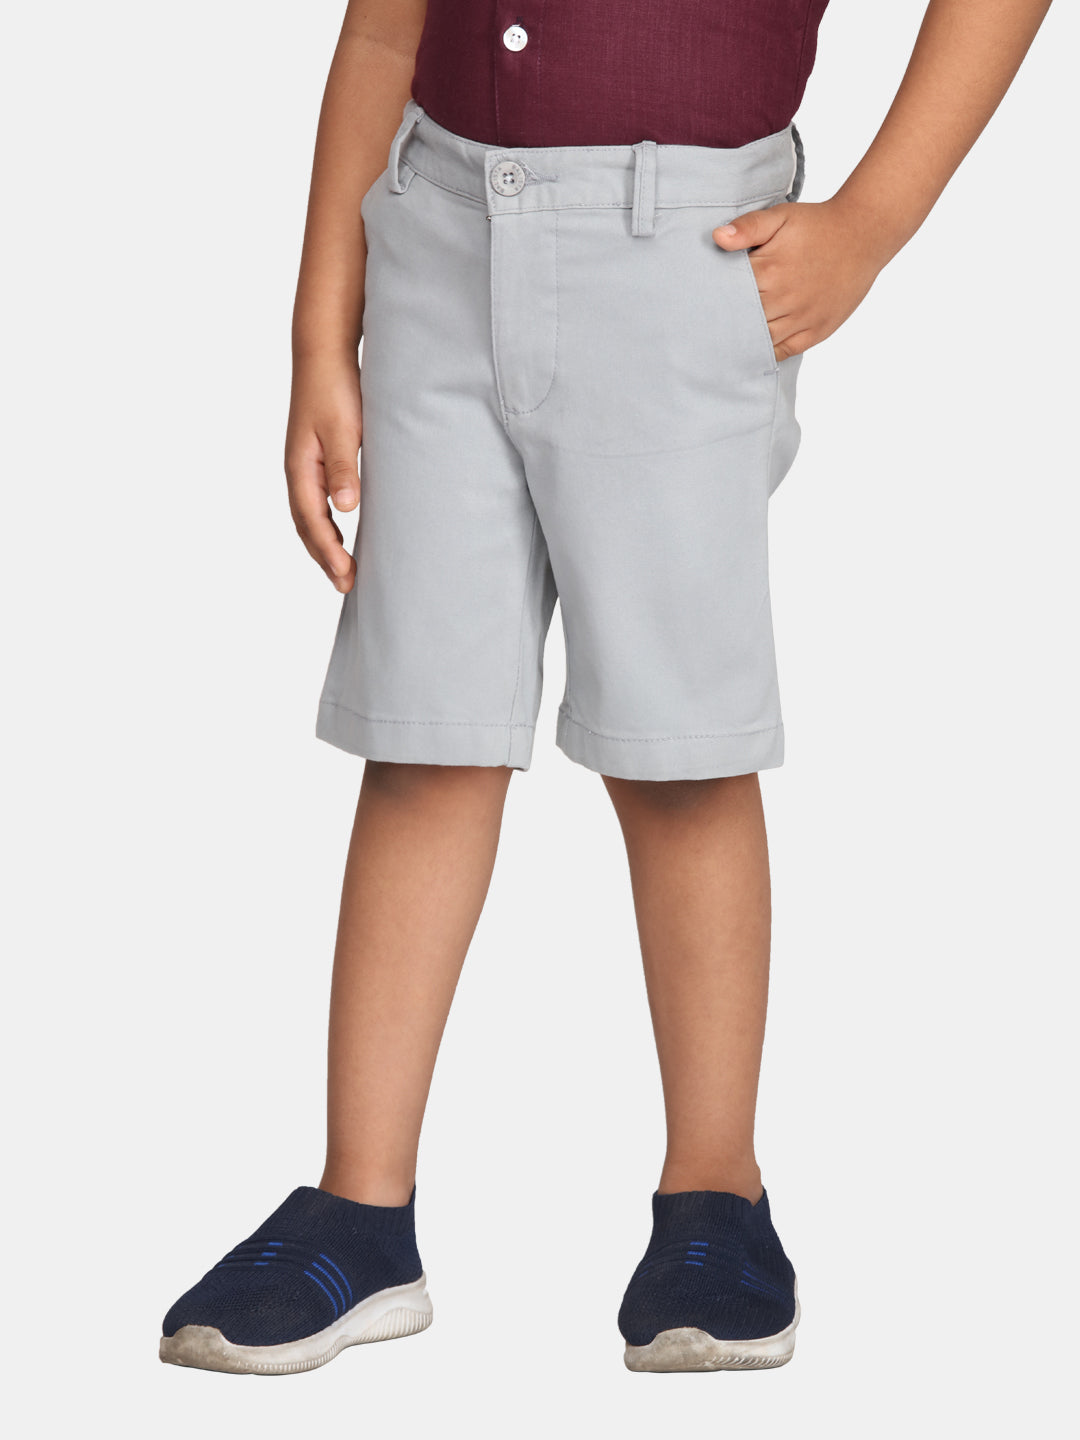 Boys Ash Grey Colour Casual Chino Shorts